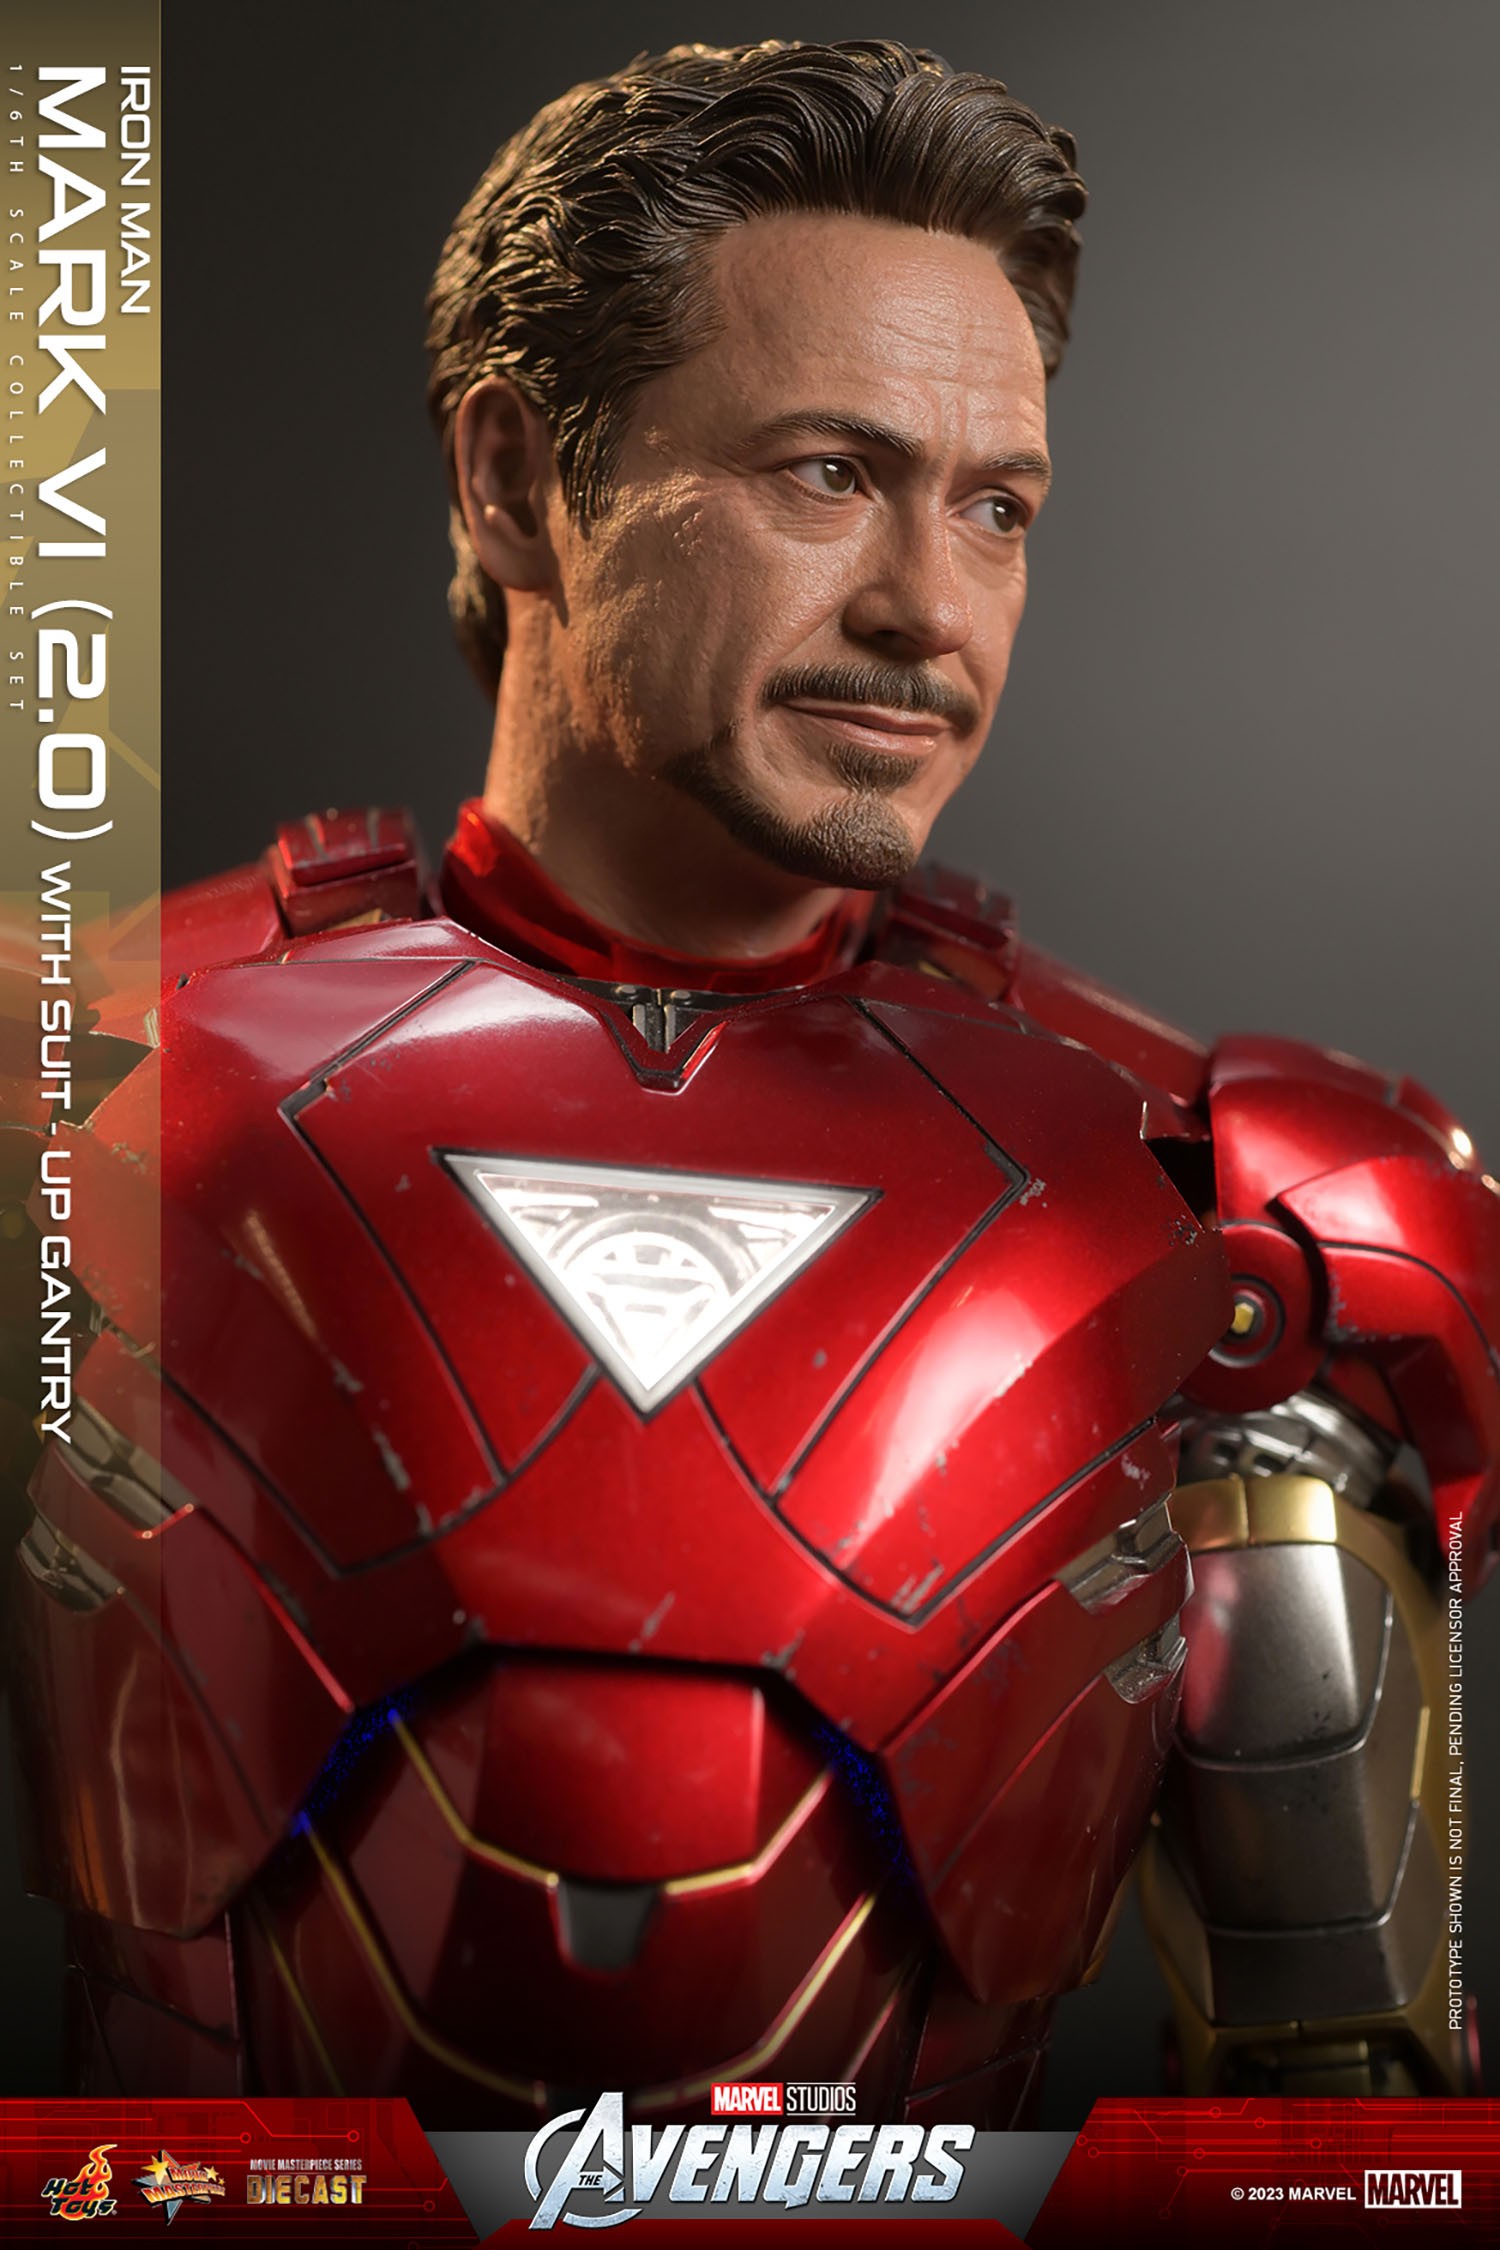 Iron Man Mark VI (2.0) with Suit-Up Gantry